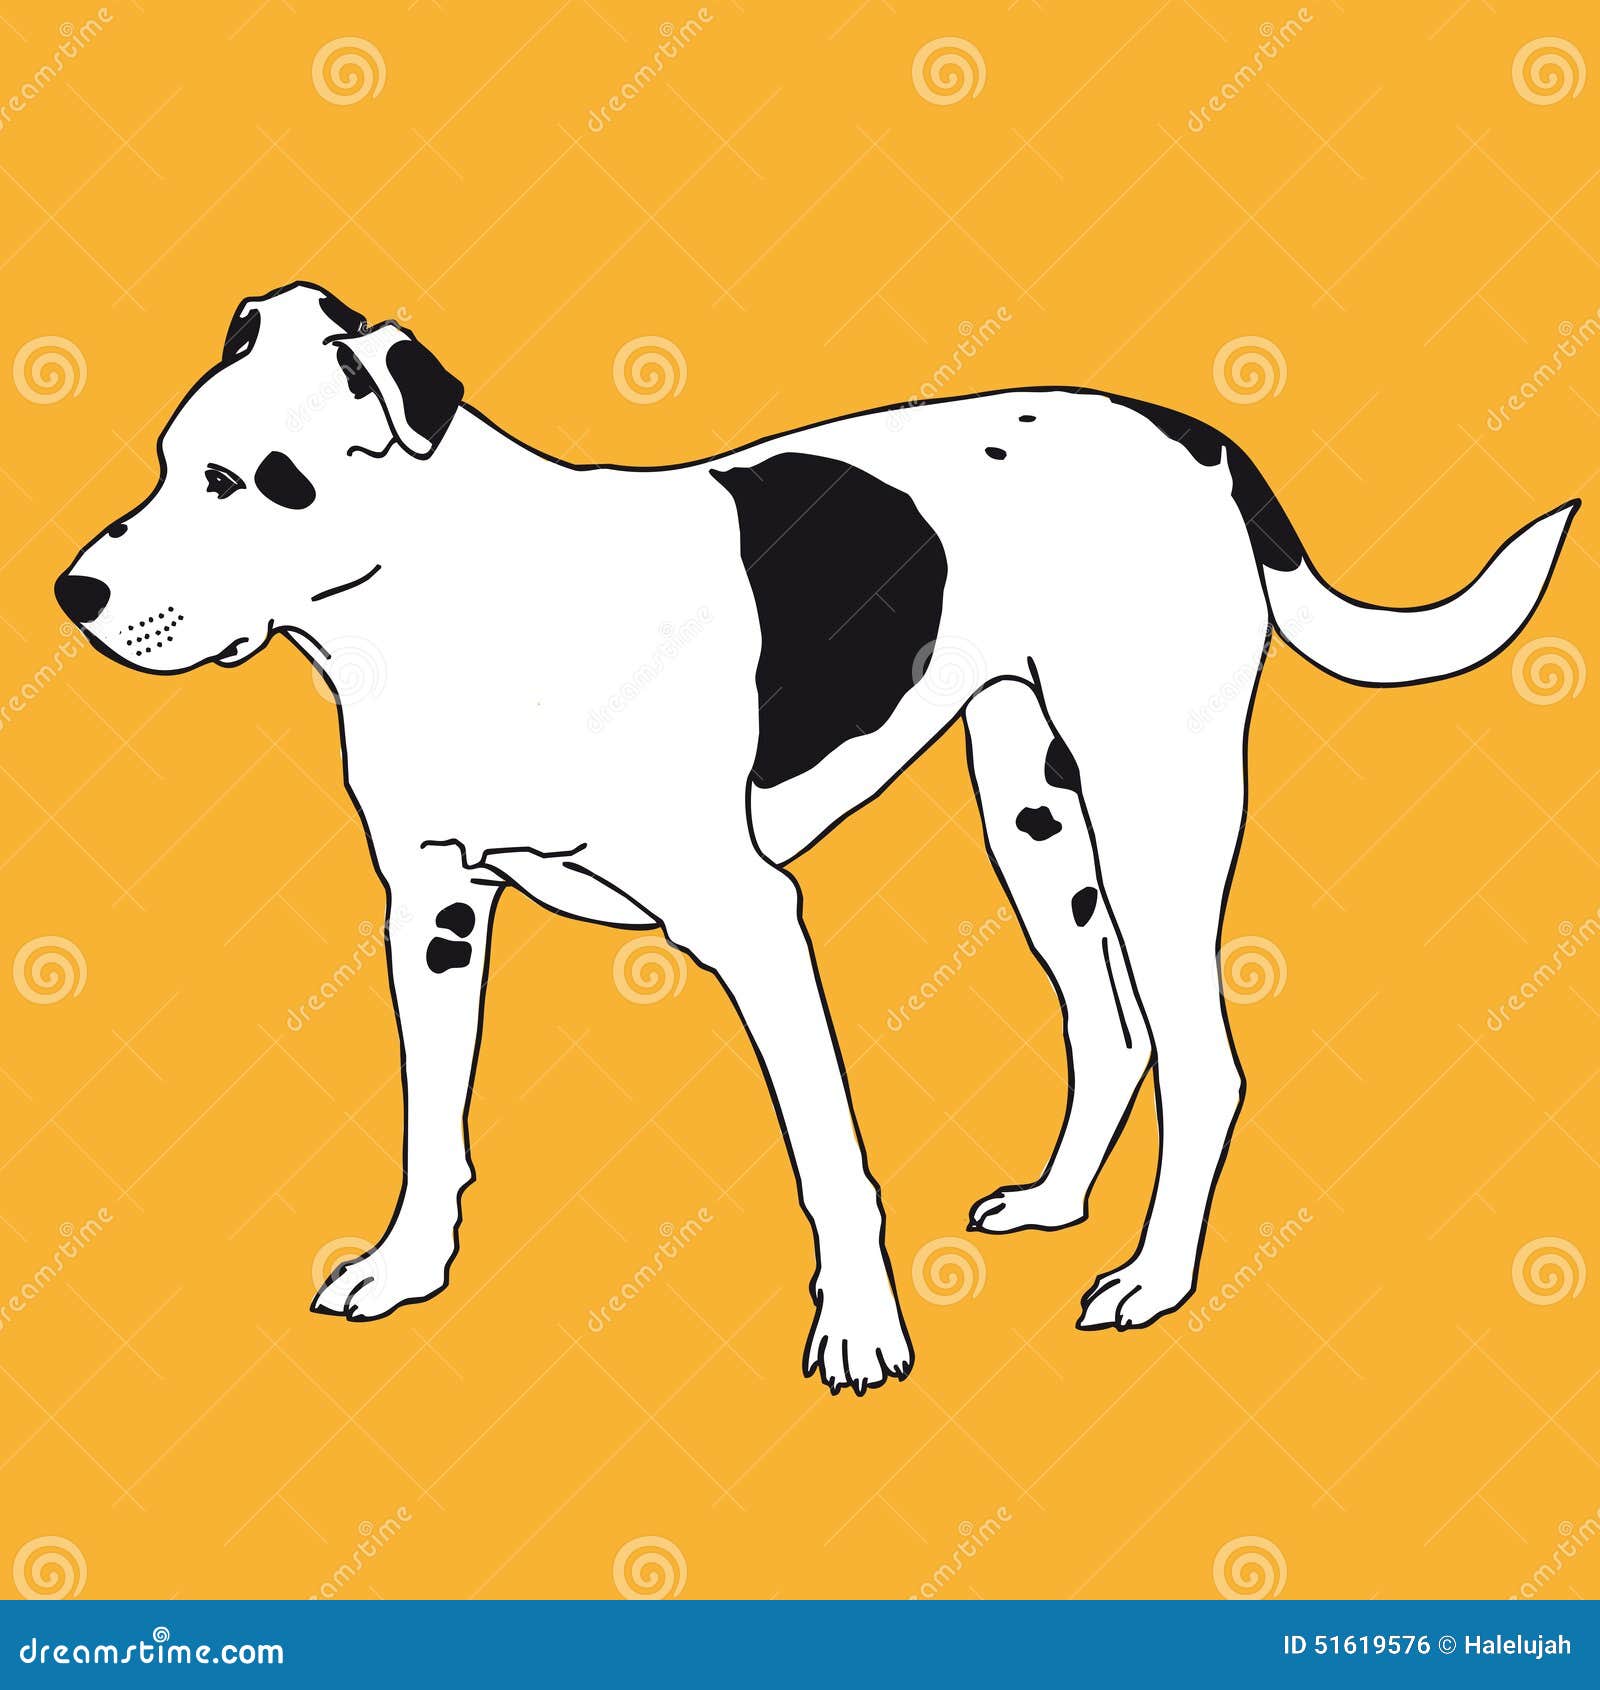 Smart dog stock vector. Illustration of family, friendly - 51619576